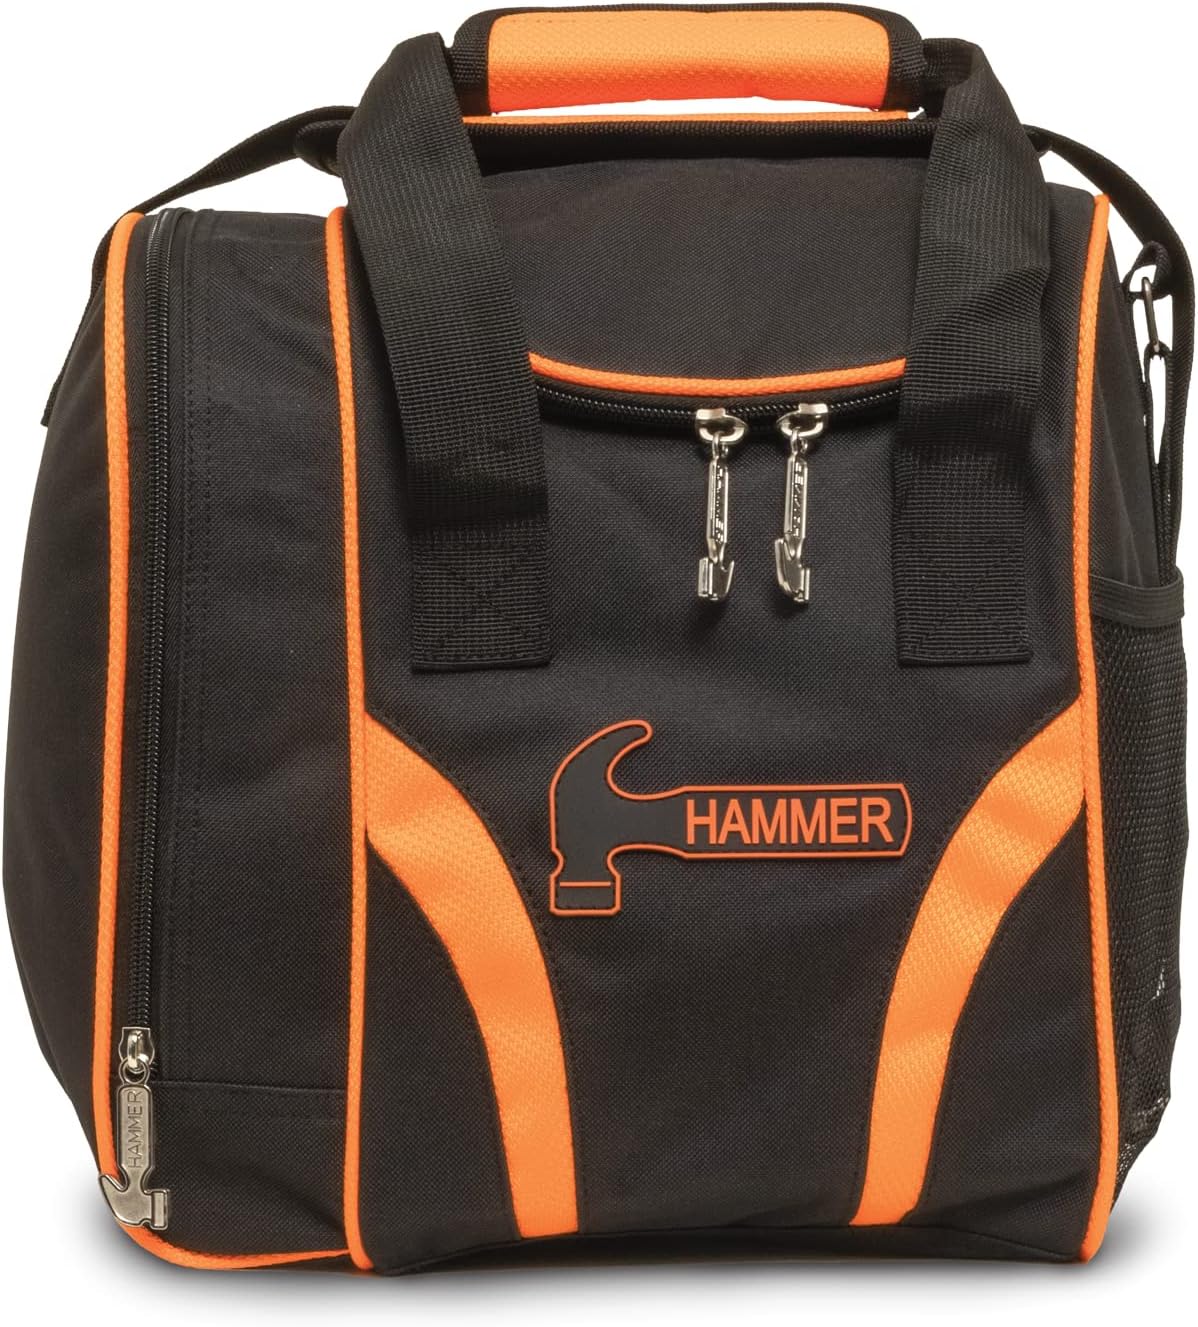 Hammer Tough Single Tote Bowling Bag